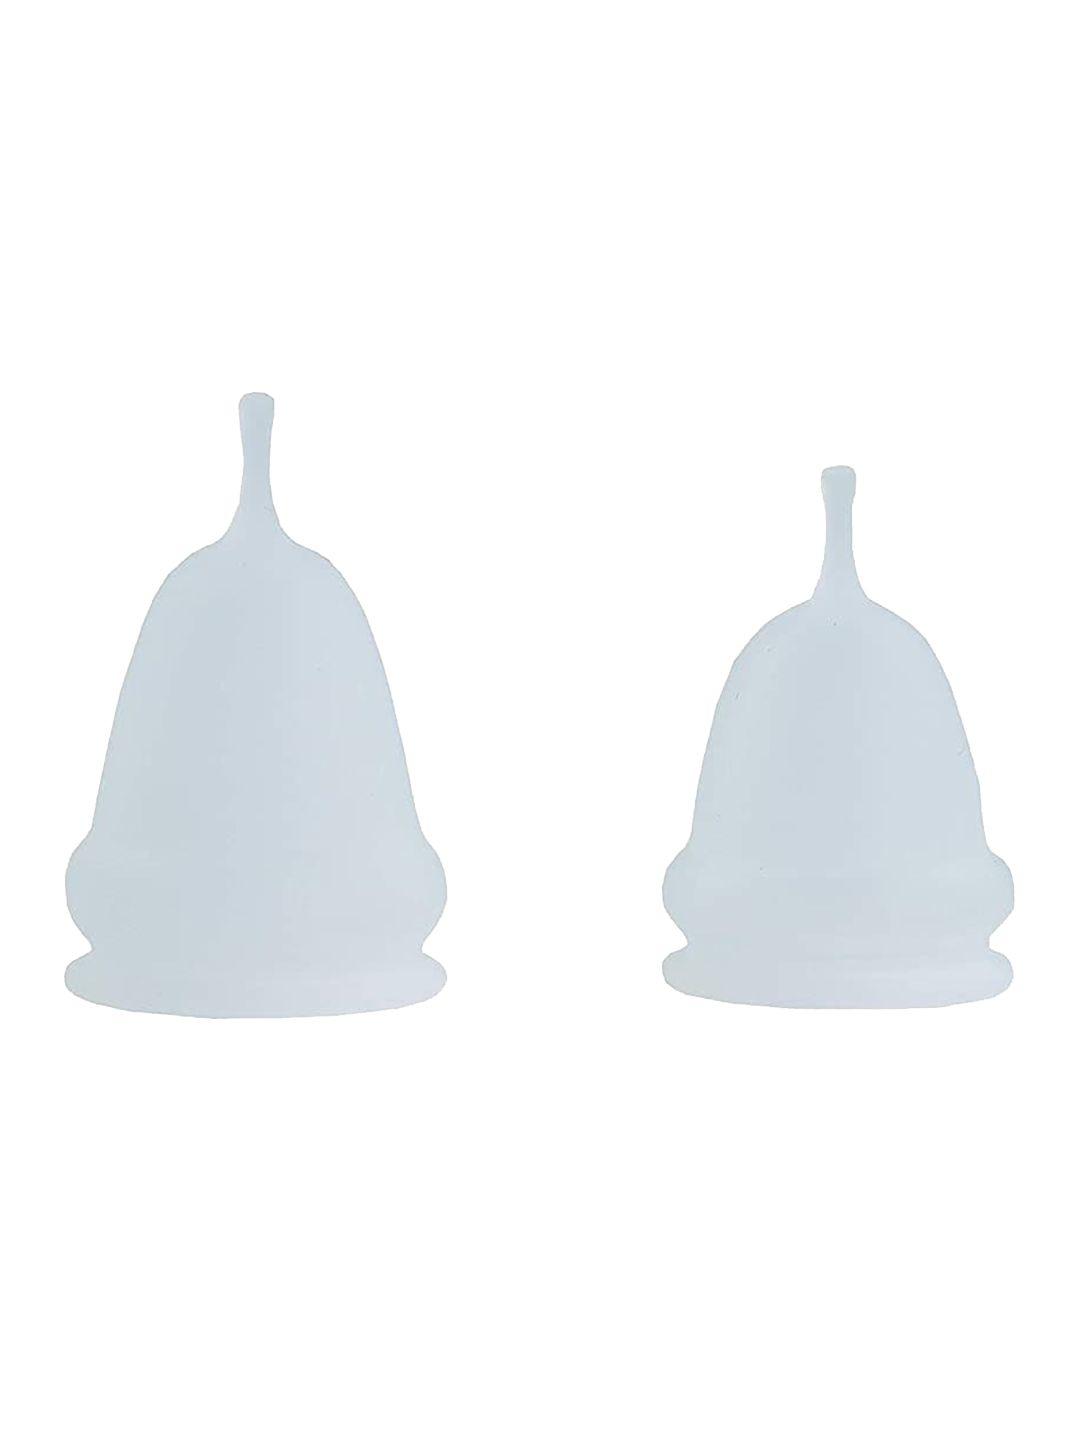 pure cups set of 2 latex free medical grade reusable menstrual cups - small & medium